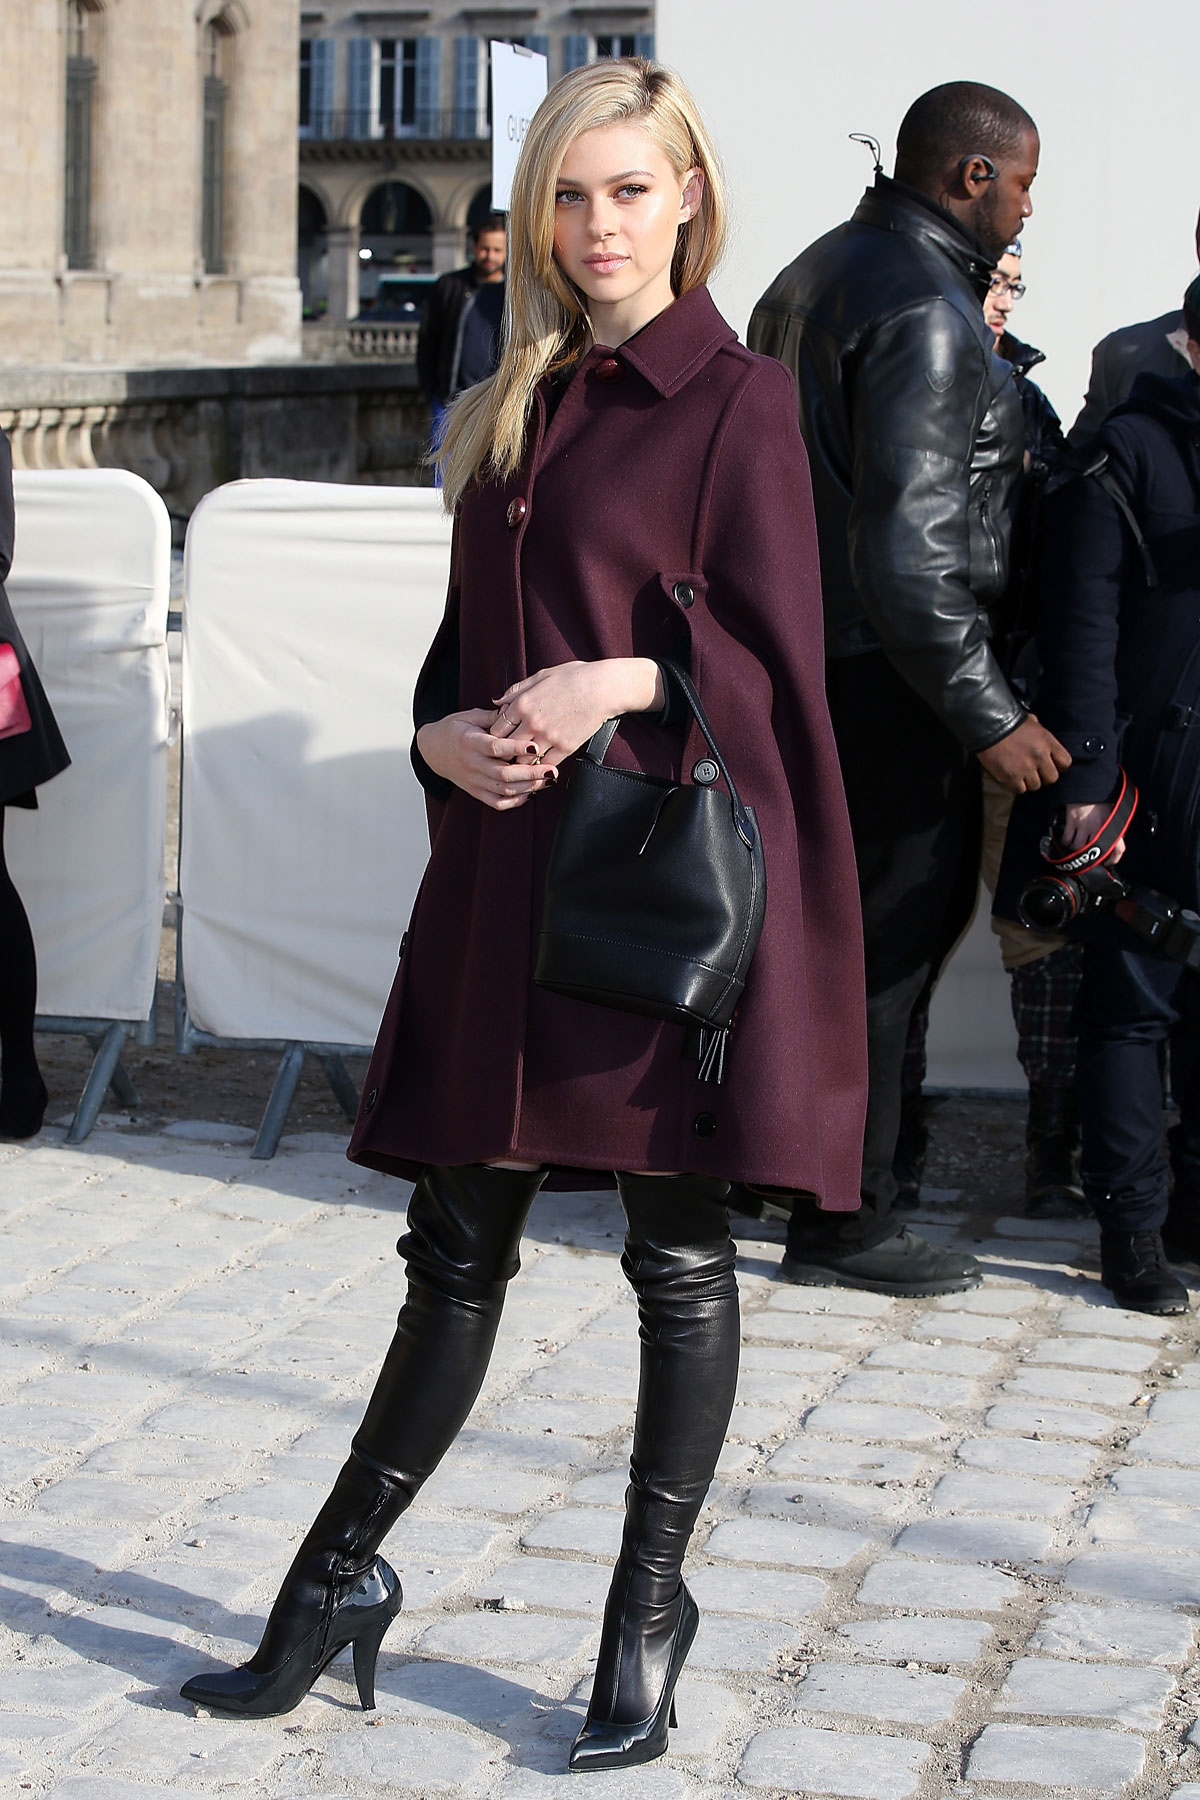 Nicola Peltz attends the Louis Vuitton show